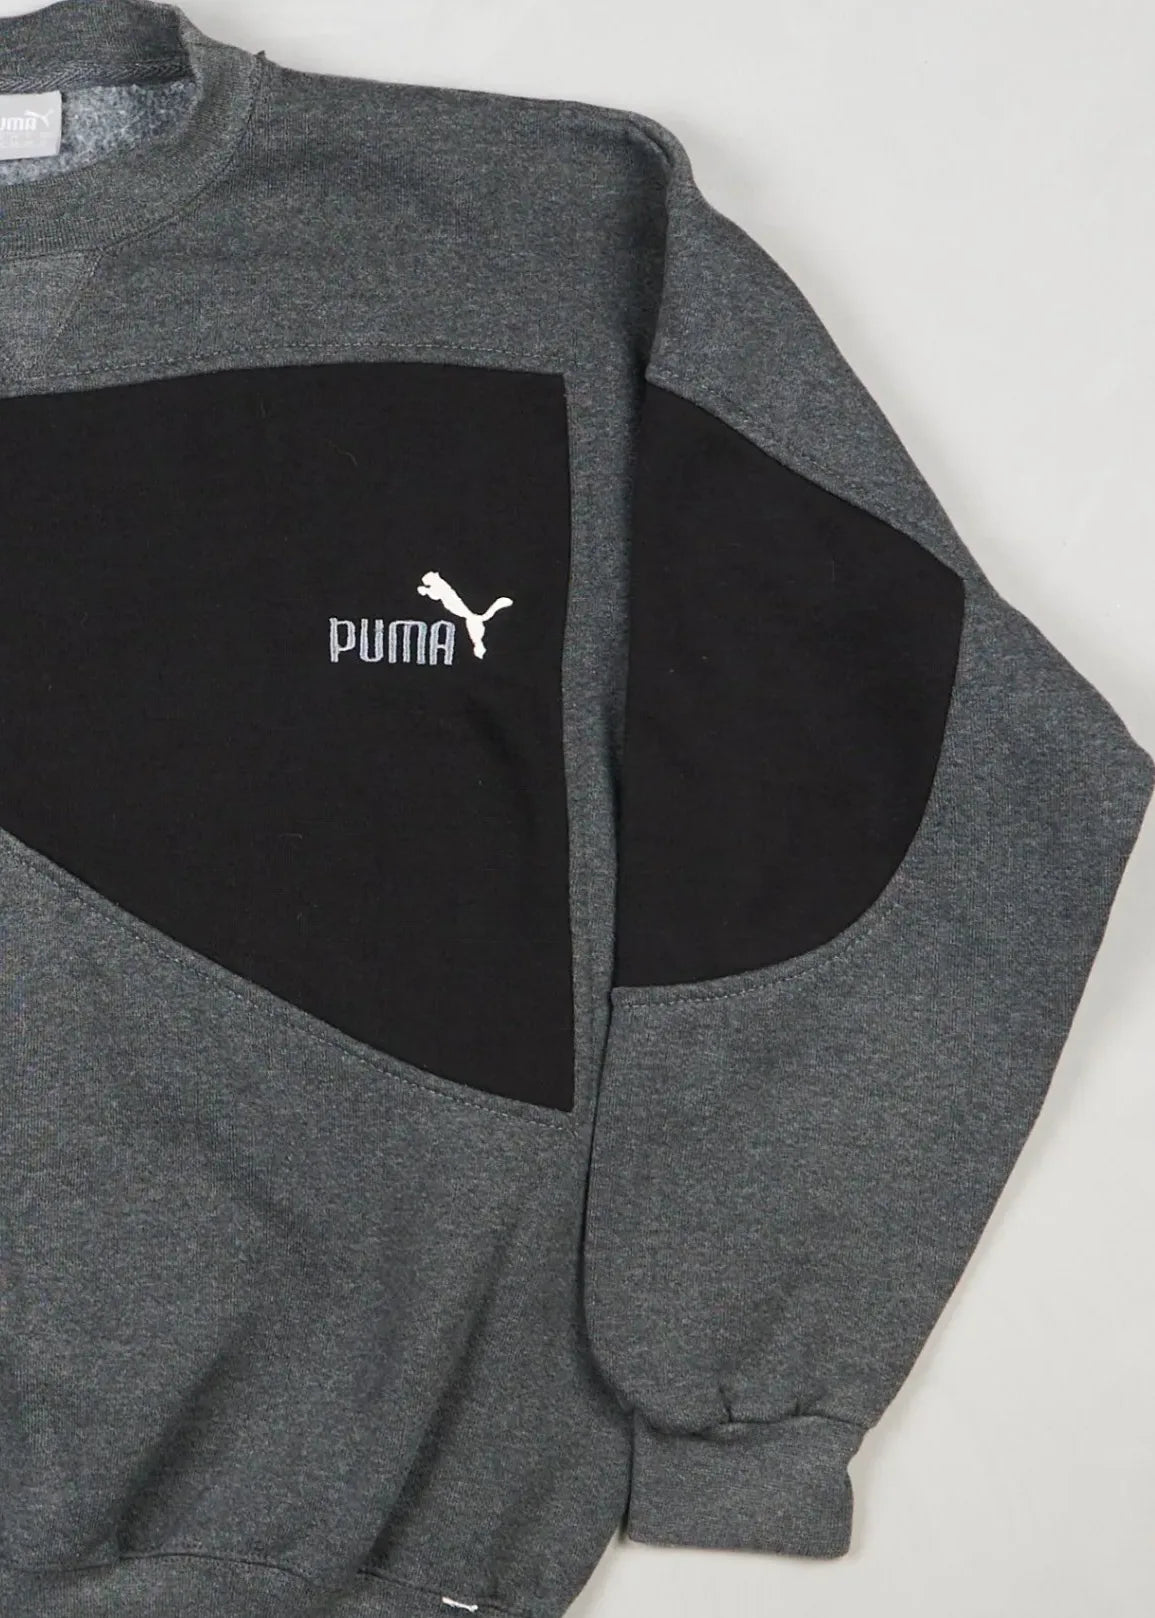 Puma - Sweatshirt (M) Right